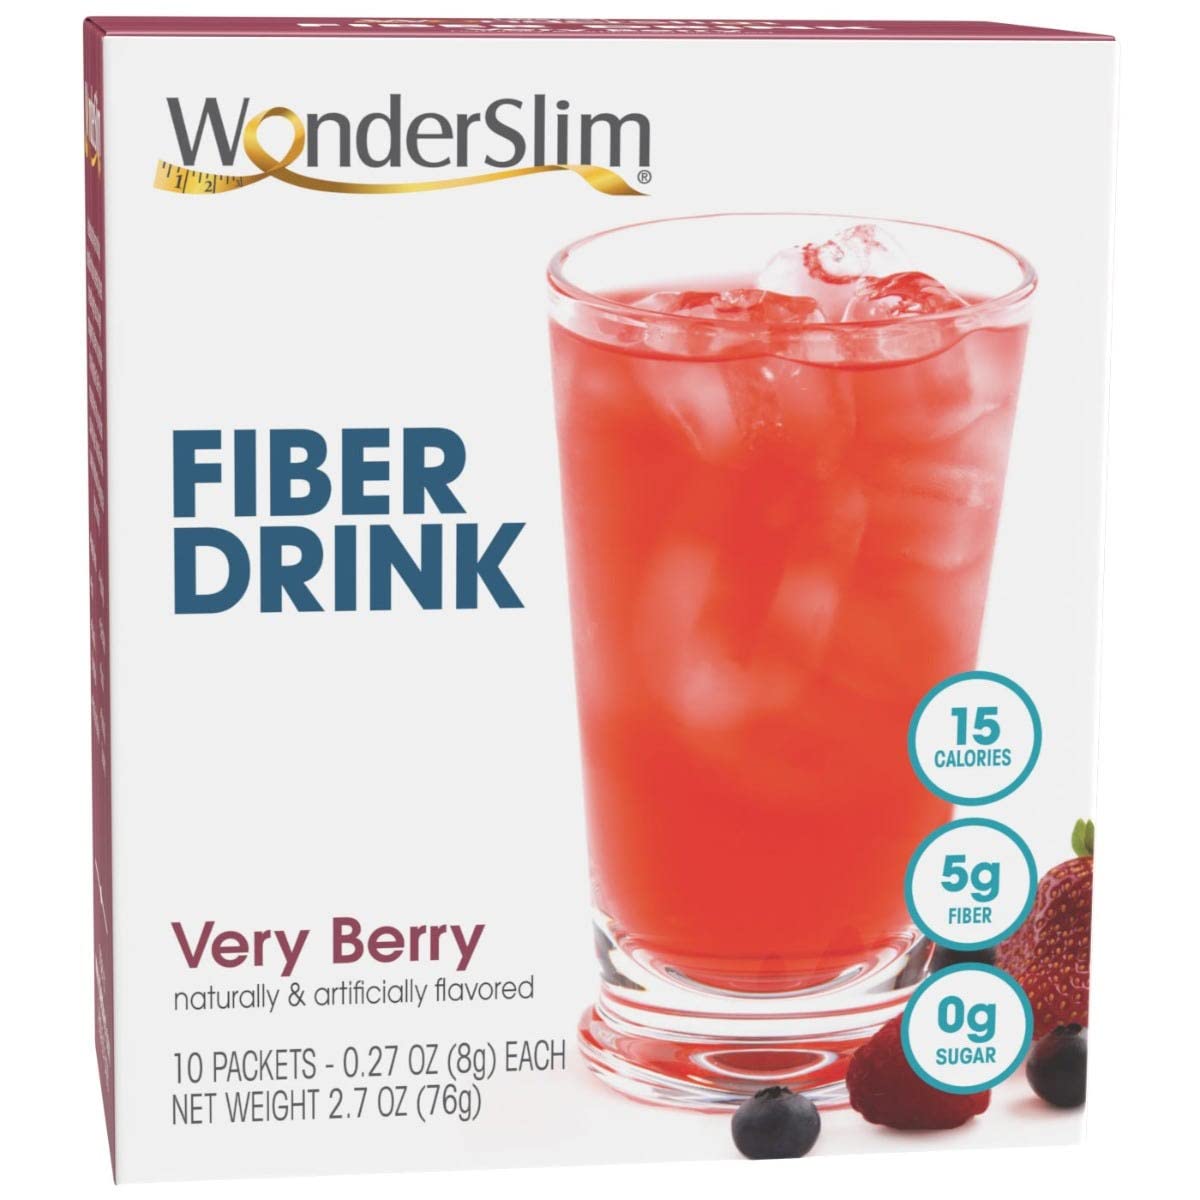 WonderSlim Fiber Drink, Very Berry, 5g Fiber, 7 Vitamins & Minerals, No Fat, Gluten Free, Keto Friendly & Low Carb (10ct)